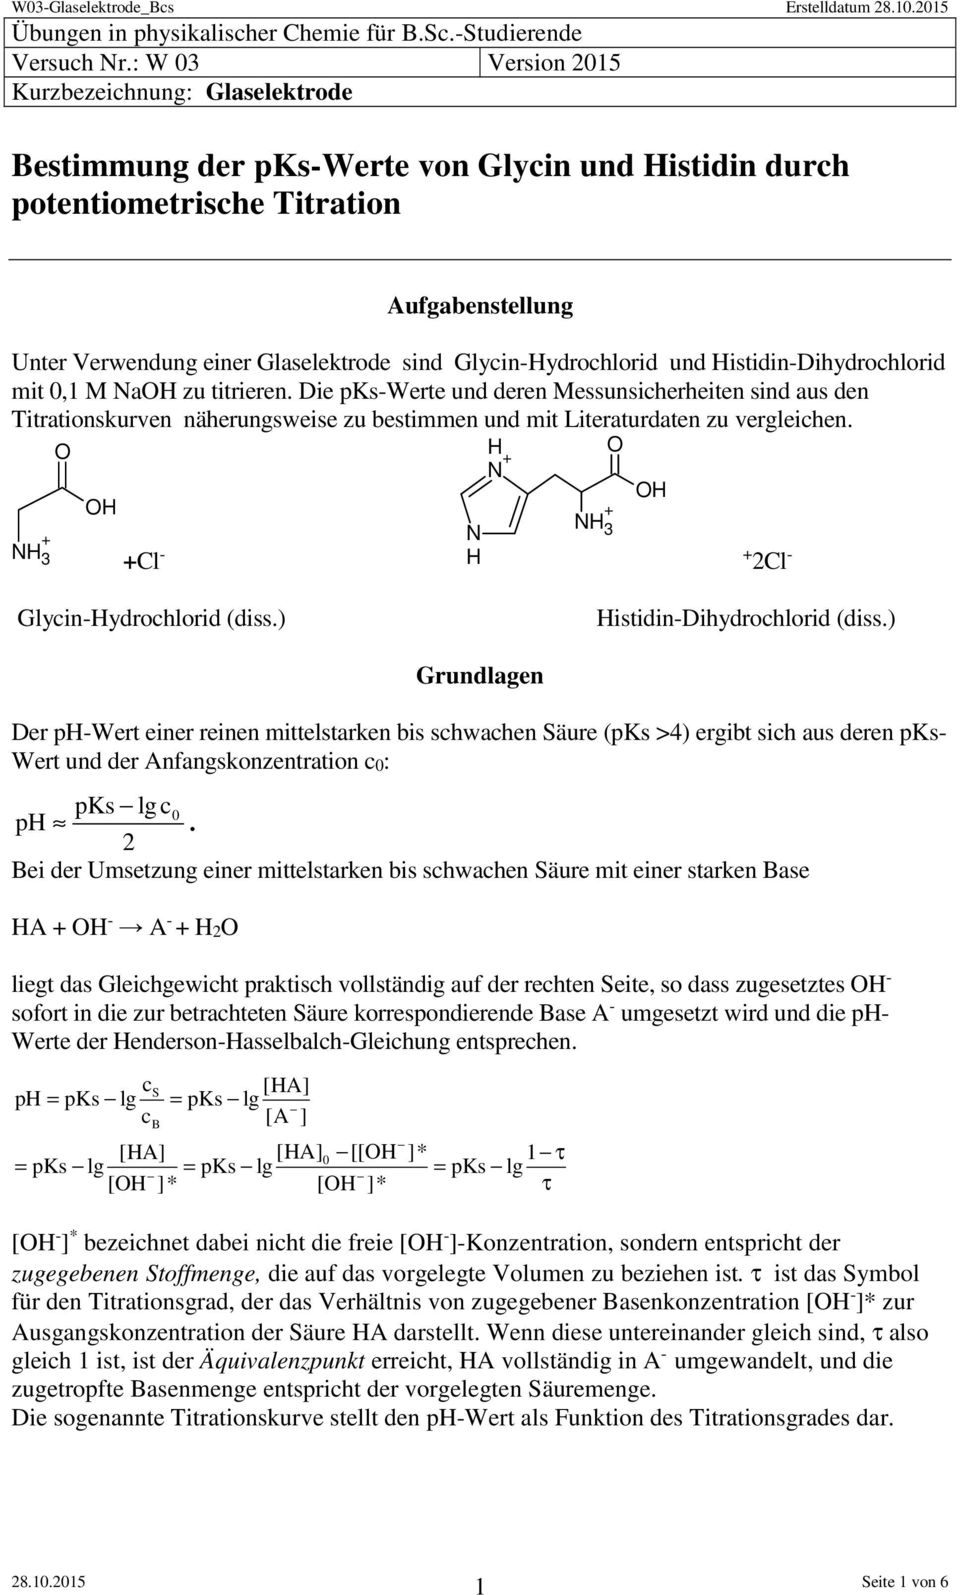 Glycin-Hydrochlorid und Histidin-Dihydrochlorid mit 0,1 M NaOH zu titrieren.